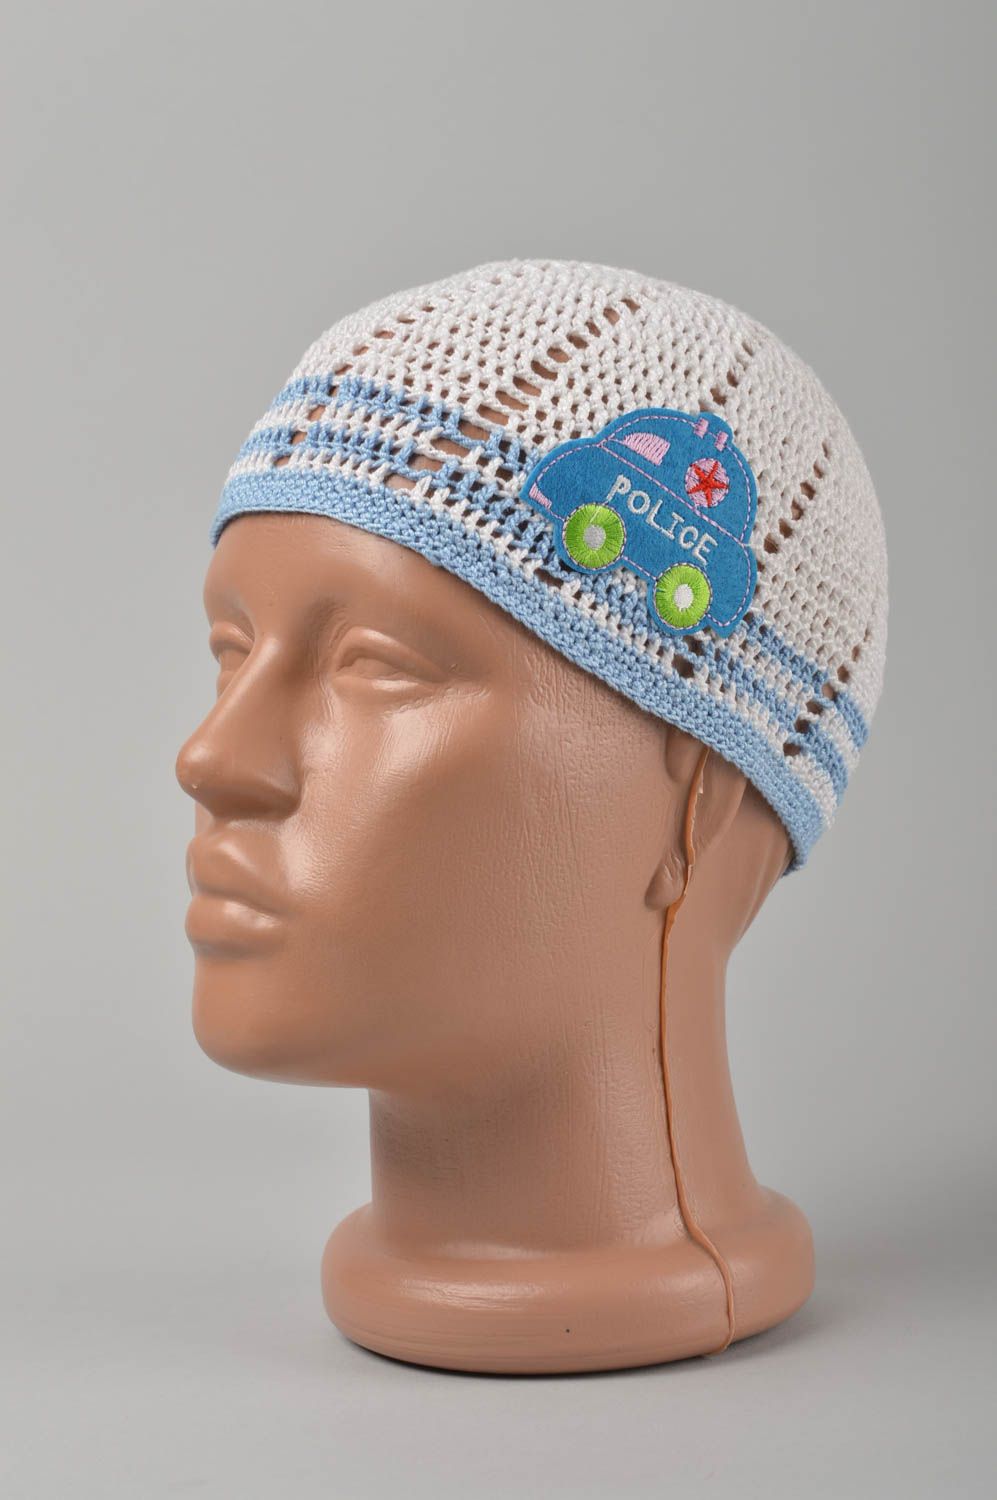 Handmade hat designer hat crocheted hat warm hat for baby spring hat for kids photo 1